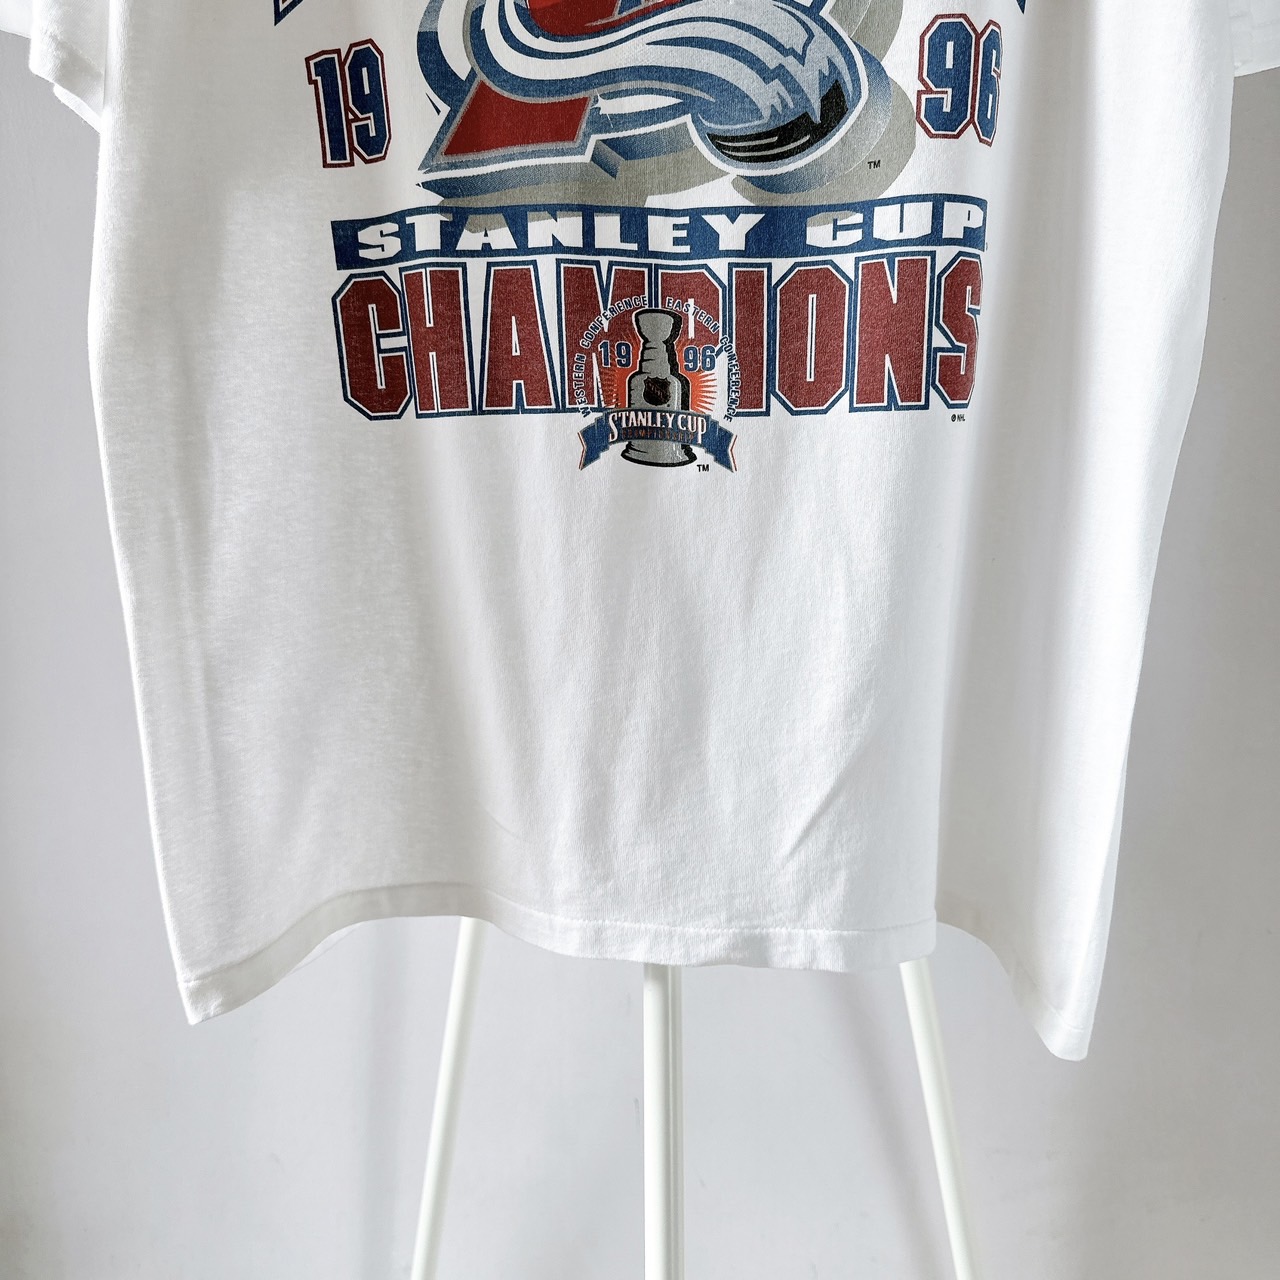 CustomCat Colorado Avalanche Vintage NHL T-Shirt Ash / L